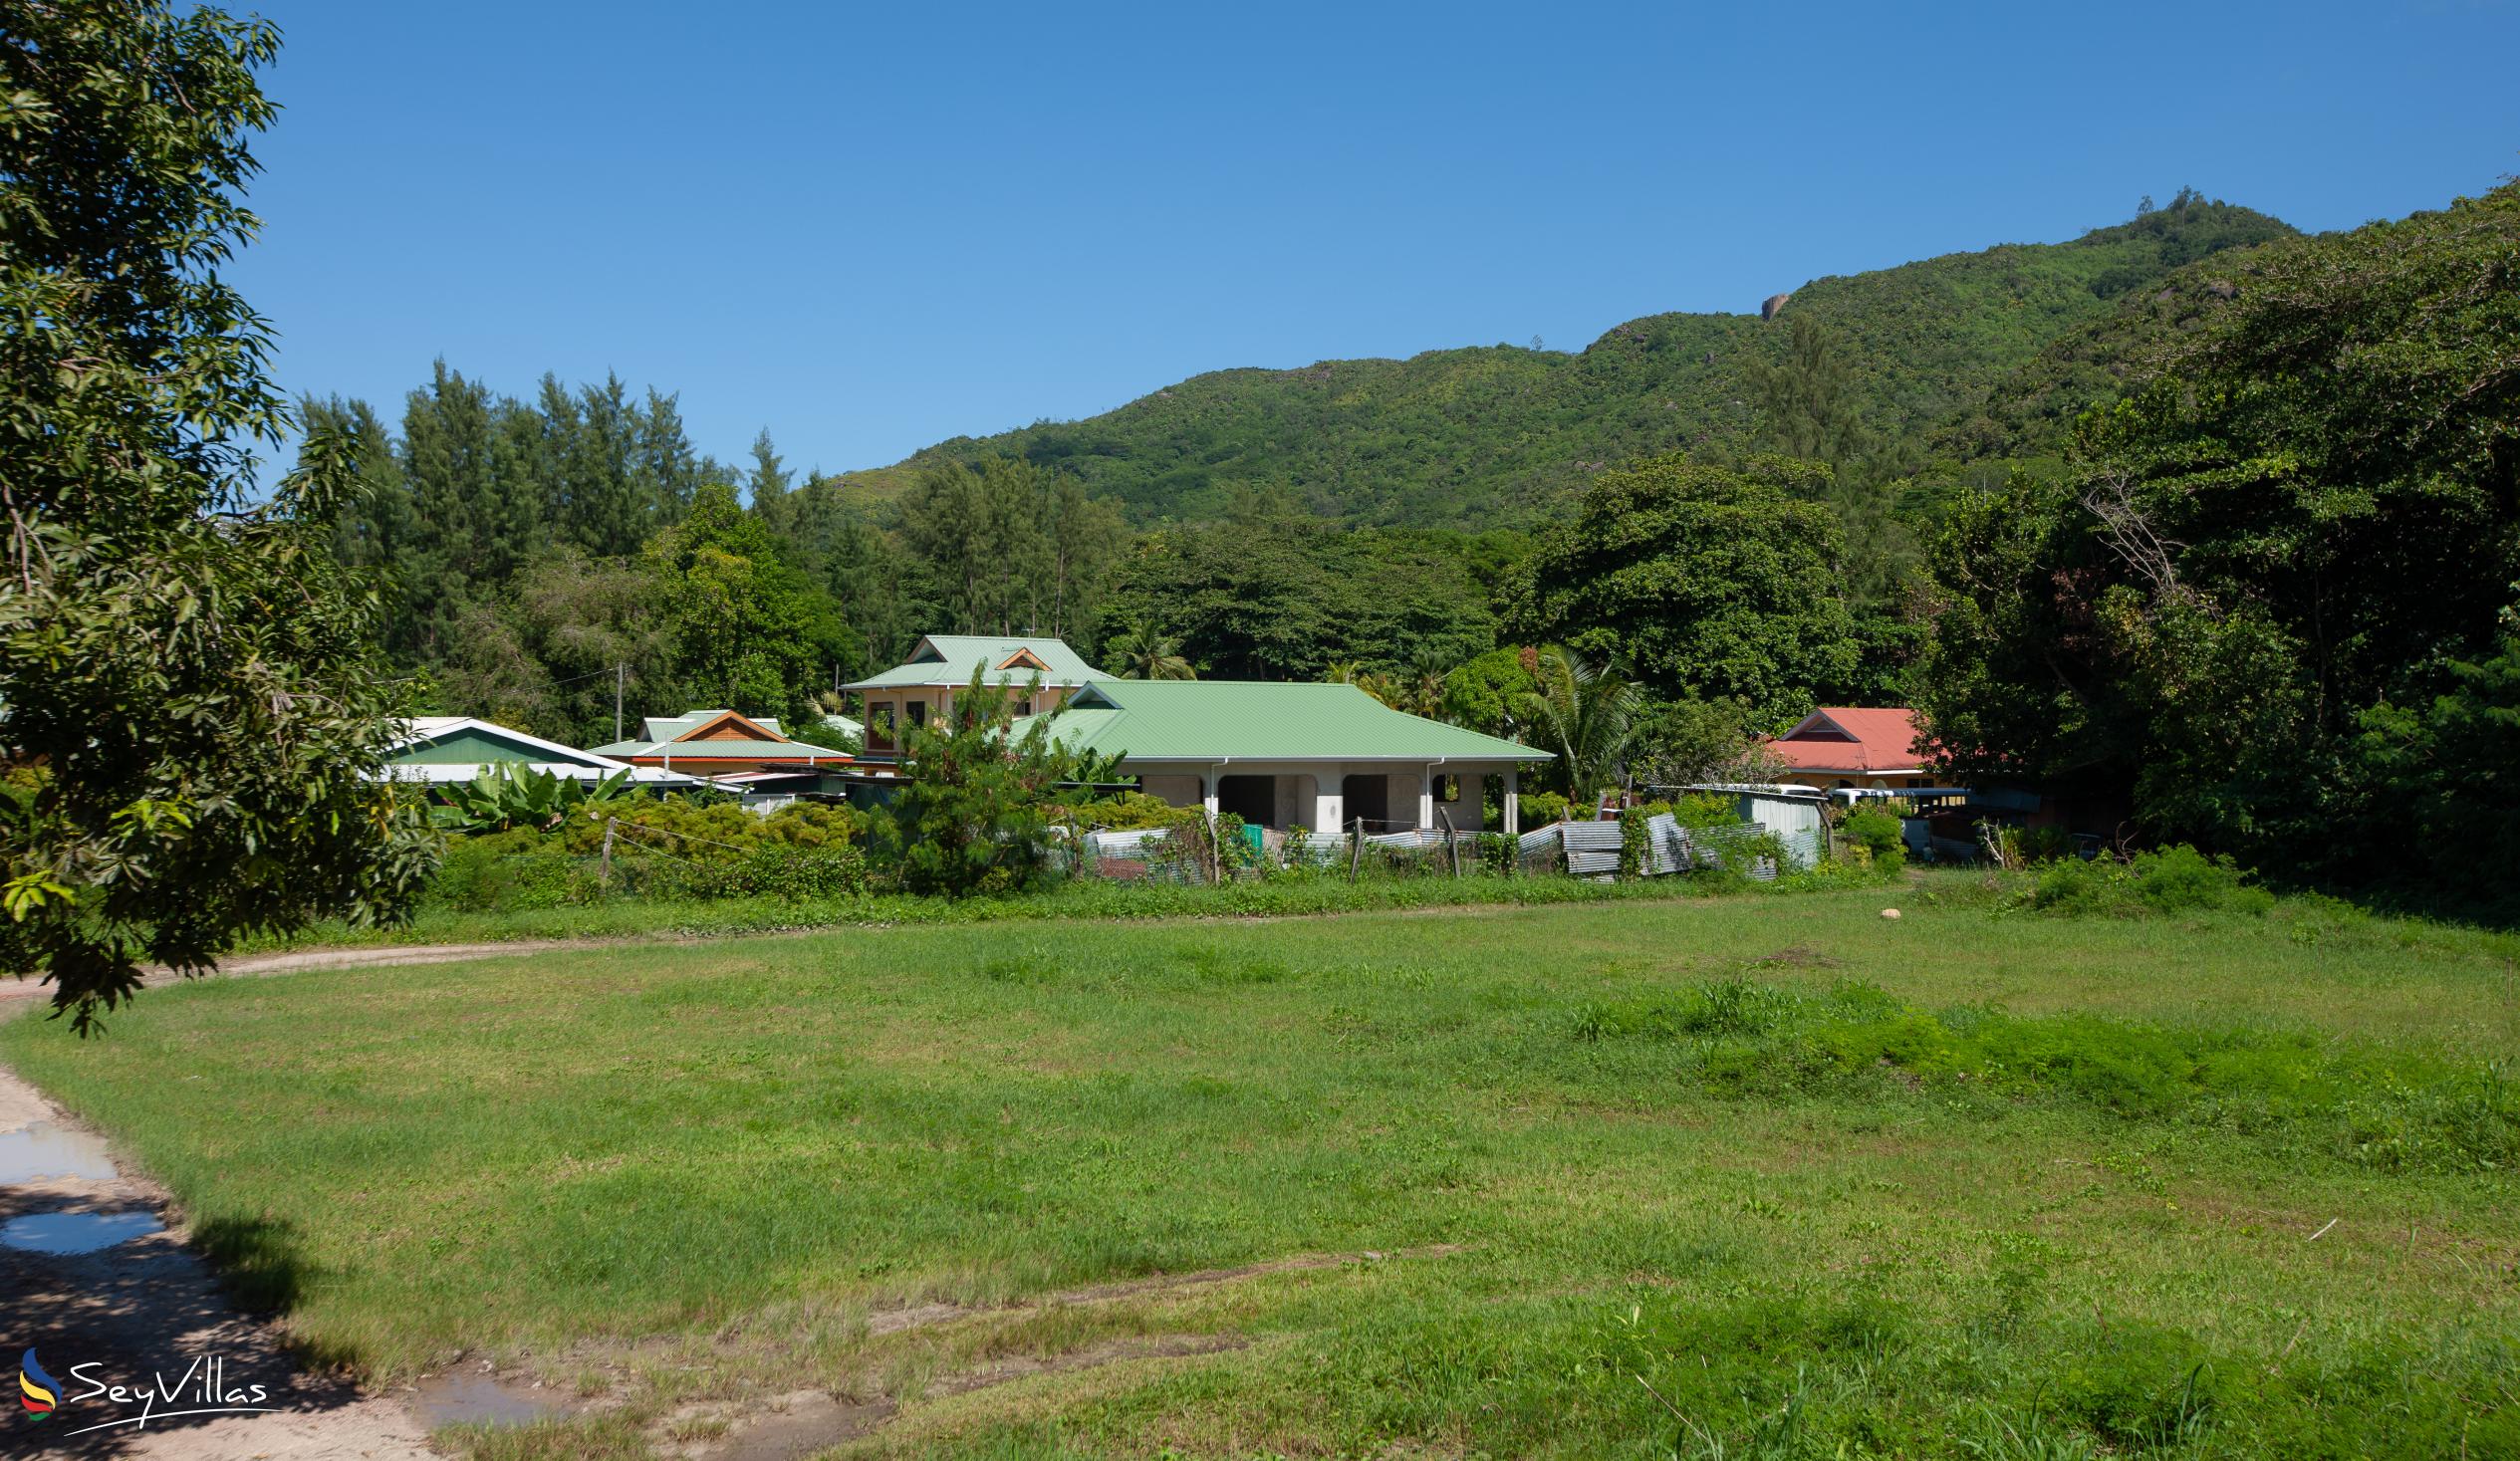 Foto 20: Tourterelle Holiday Home - Posizione - Praslin (Seychelles)